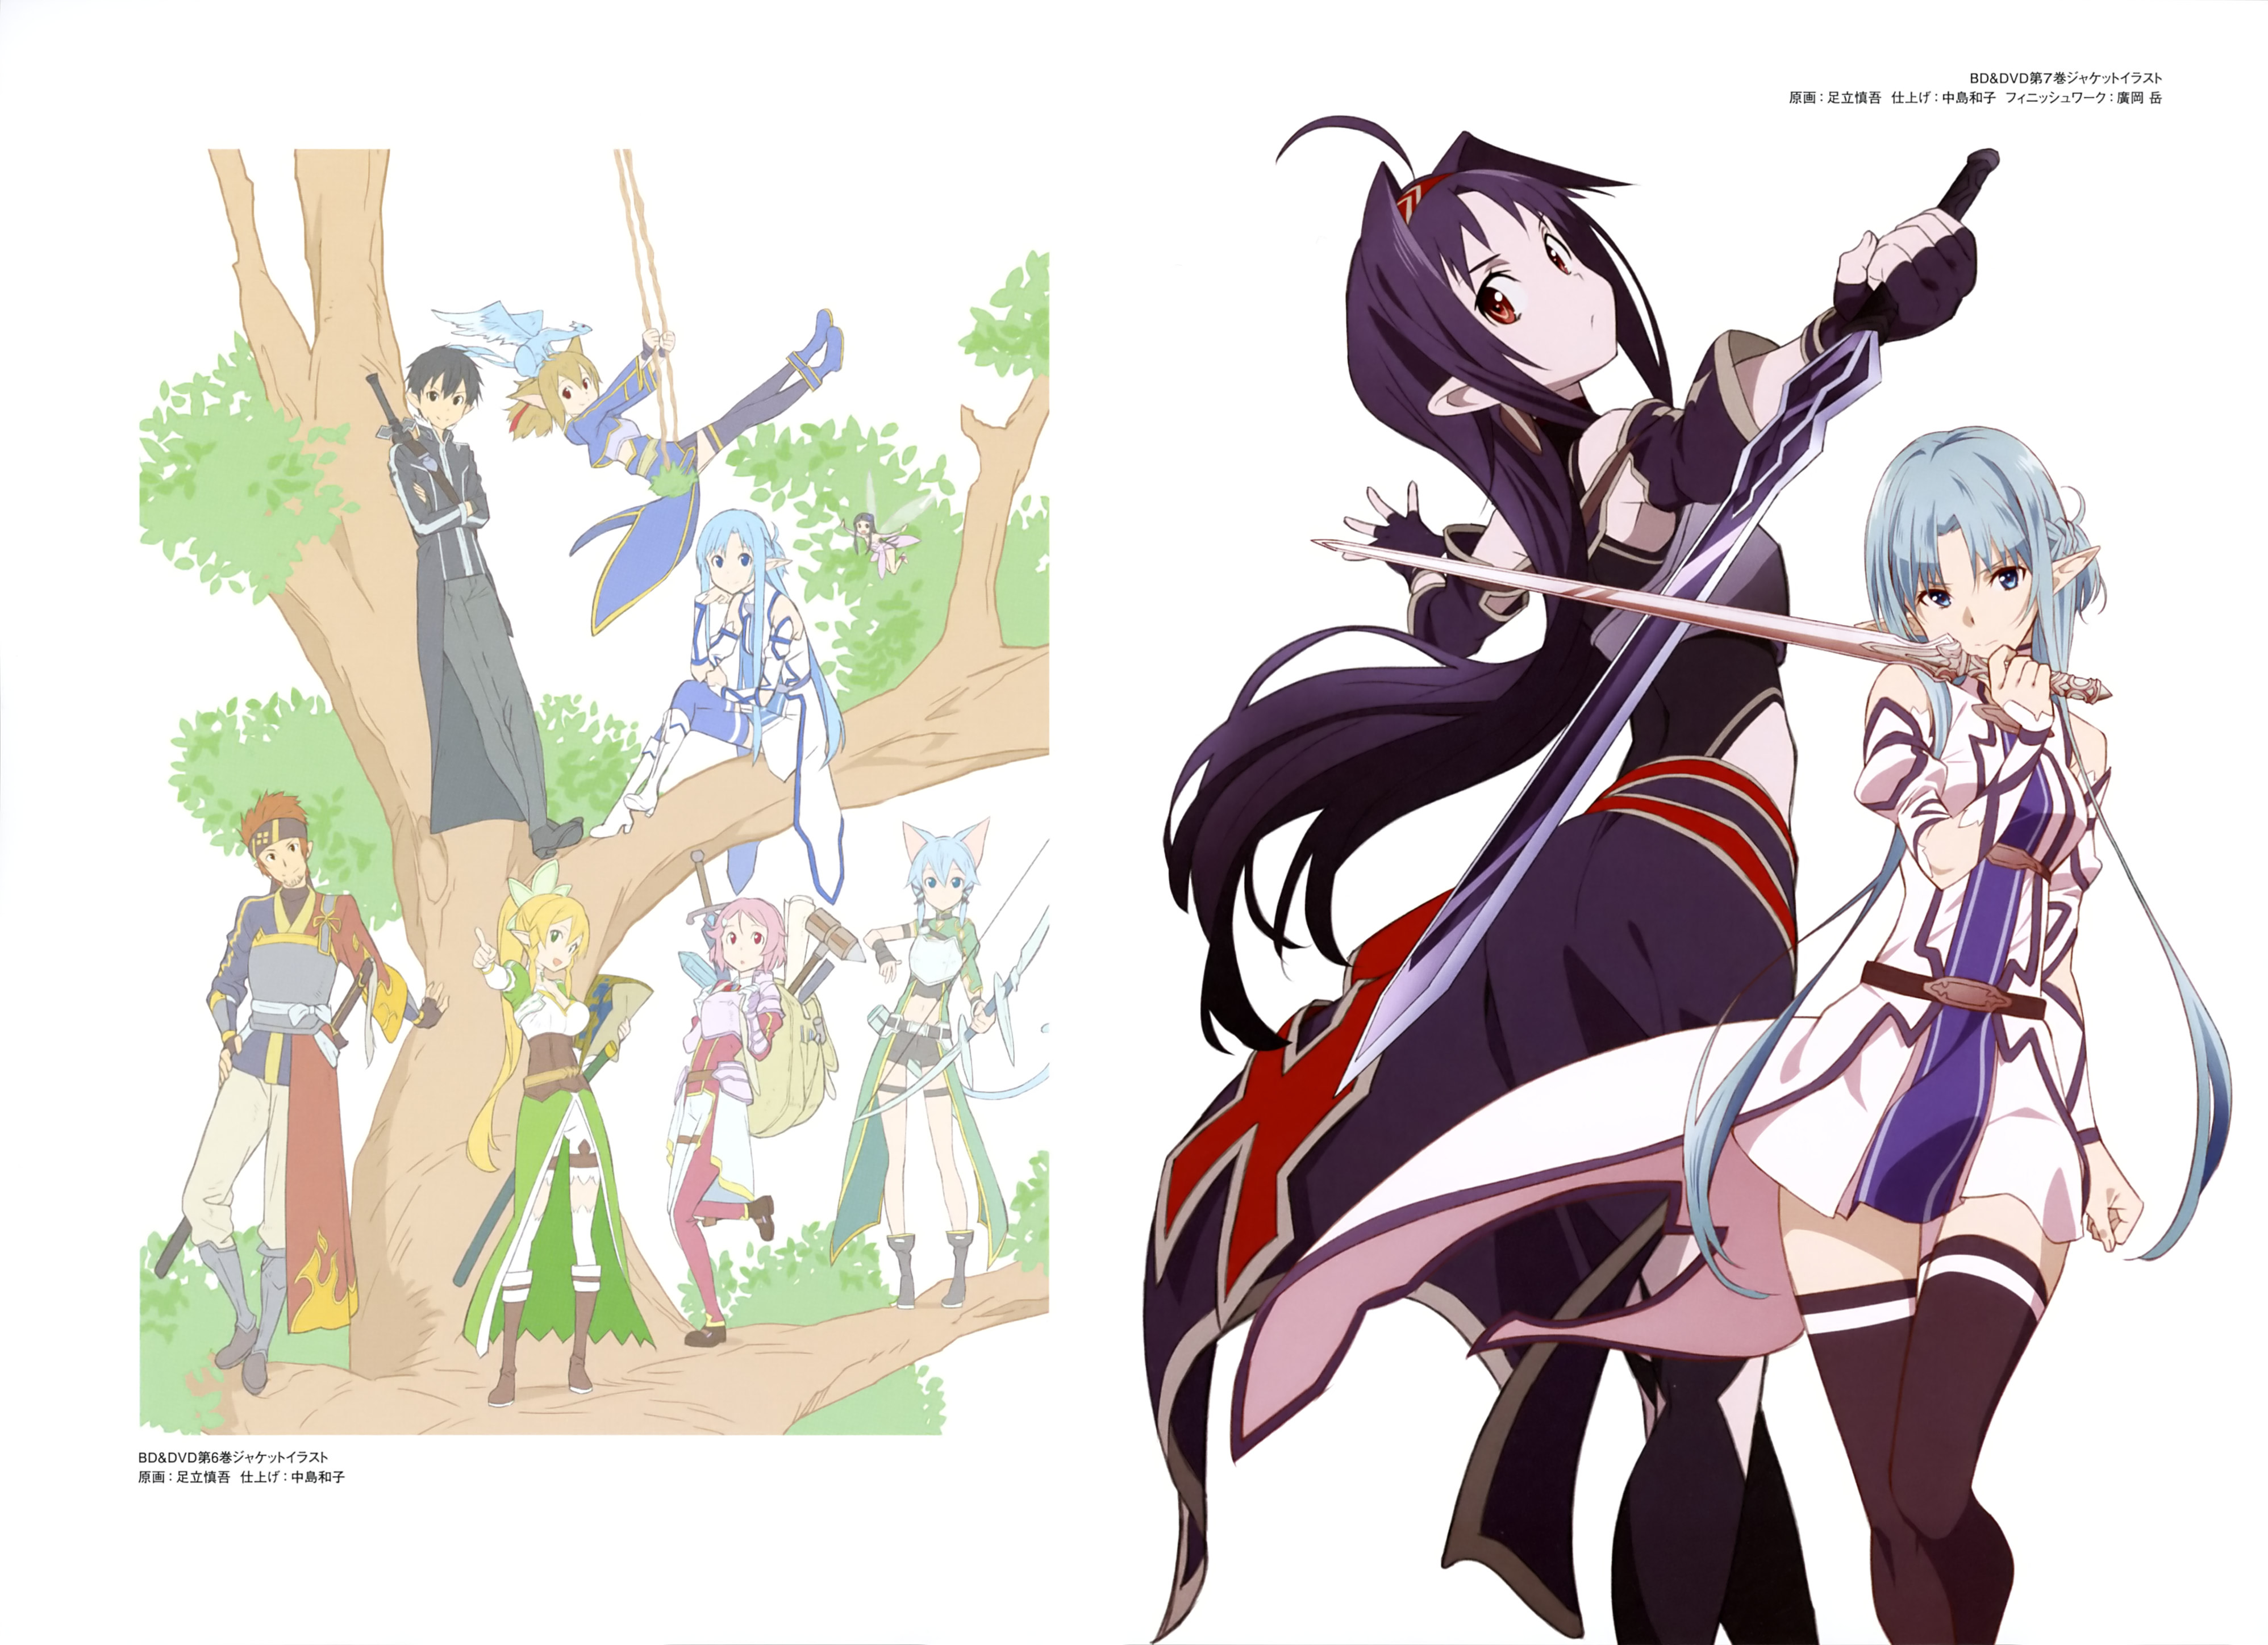 asuna, kirito, leafa, silica, lisbeth, and 1 more (sword art